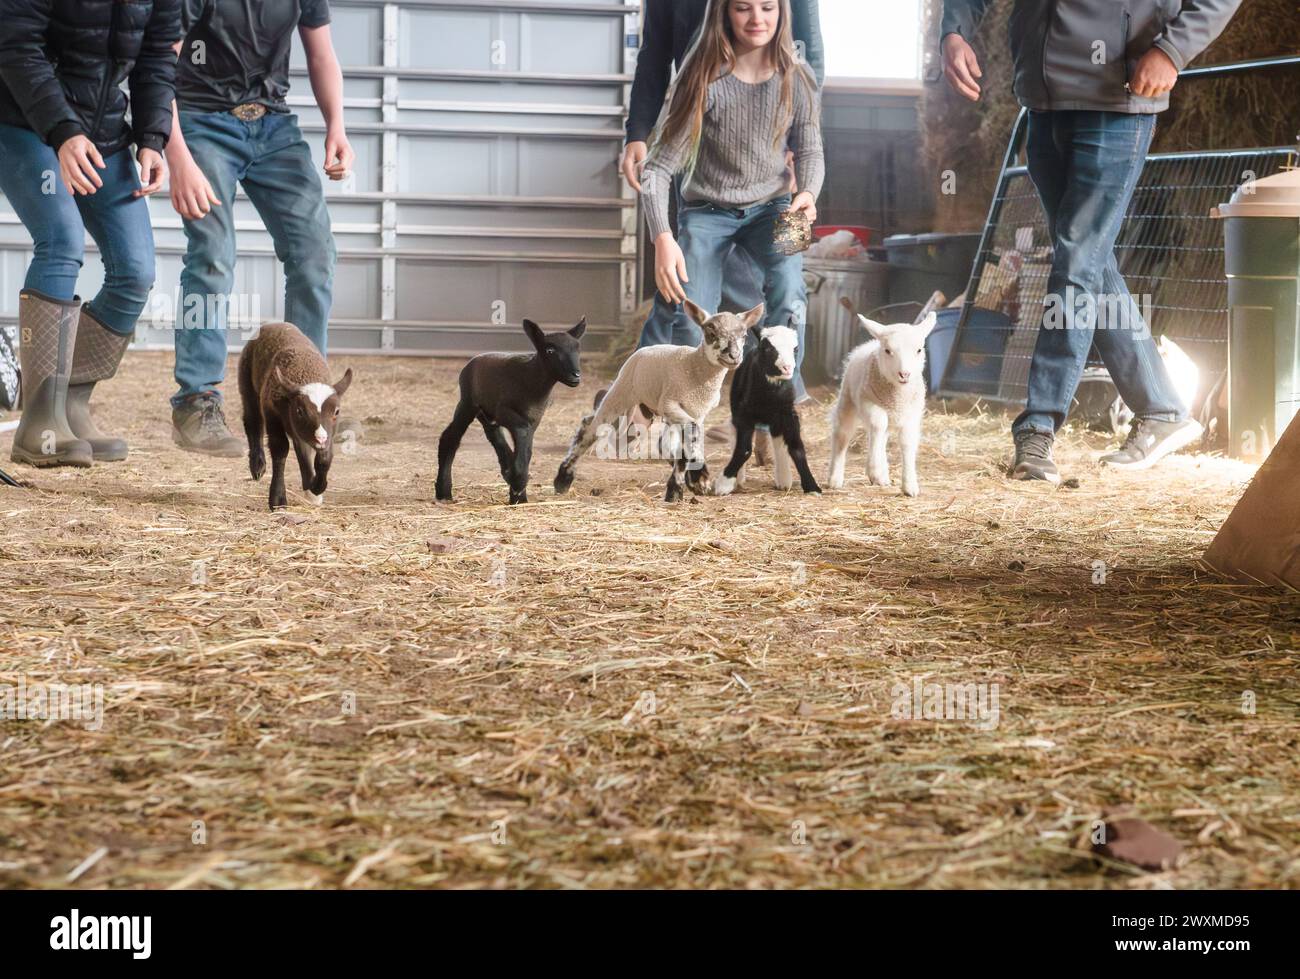 Five cute lambs running in barn. Stock Photo